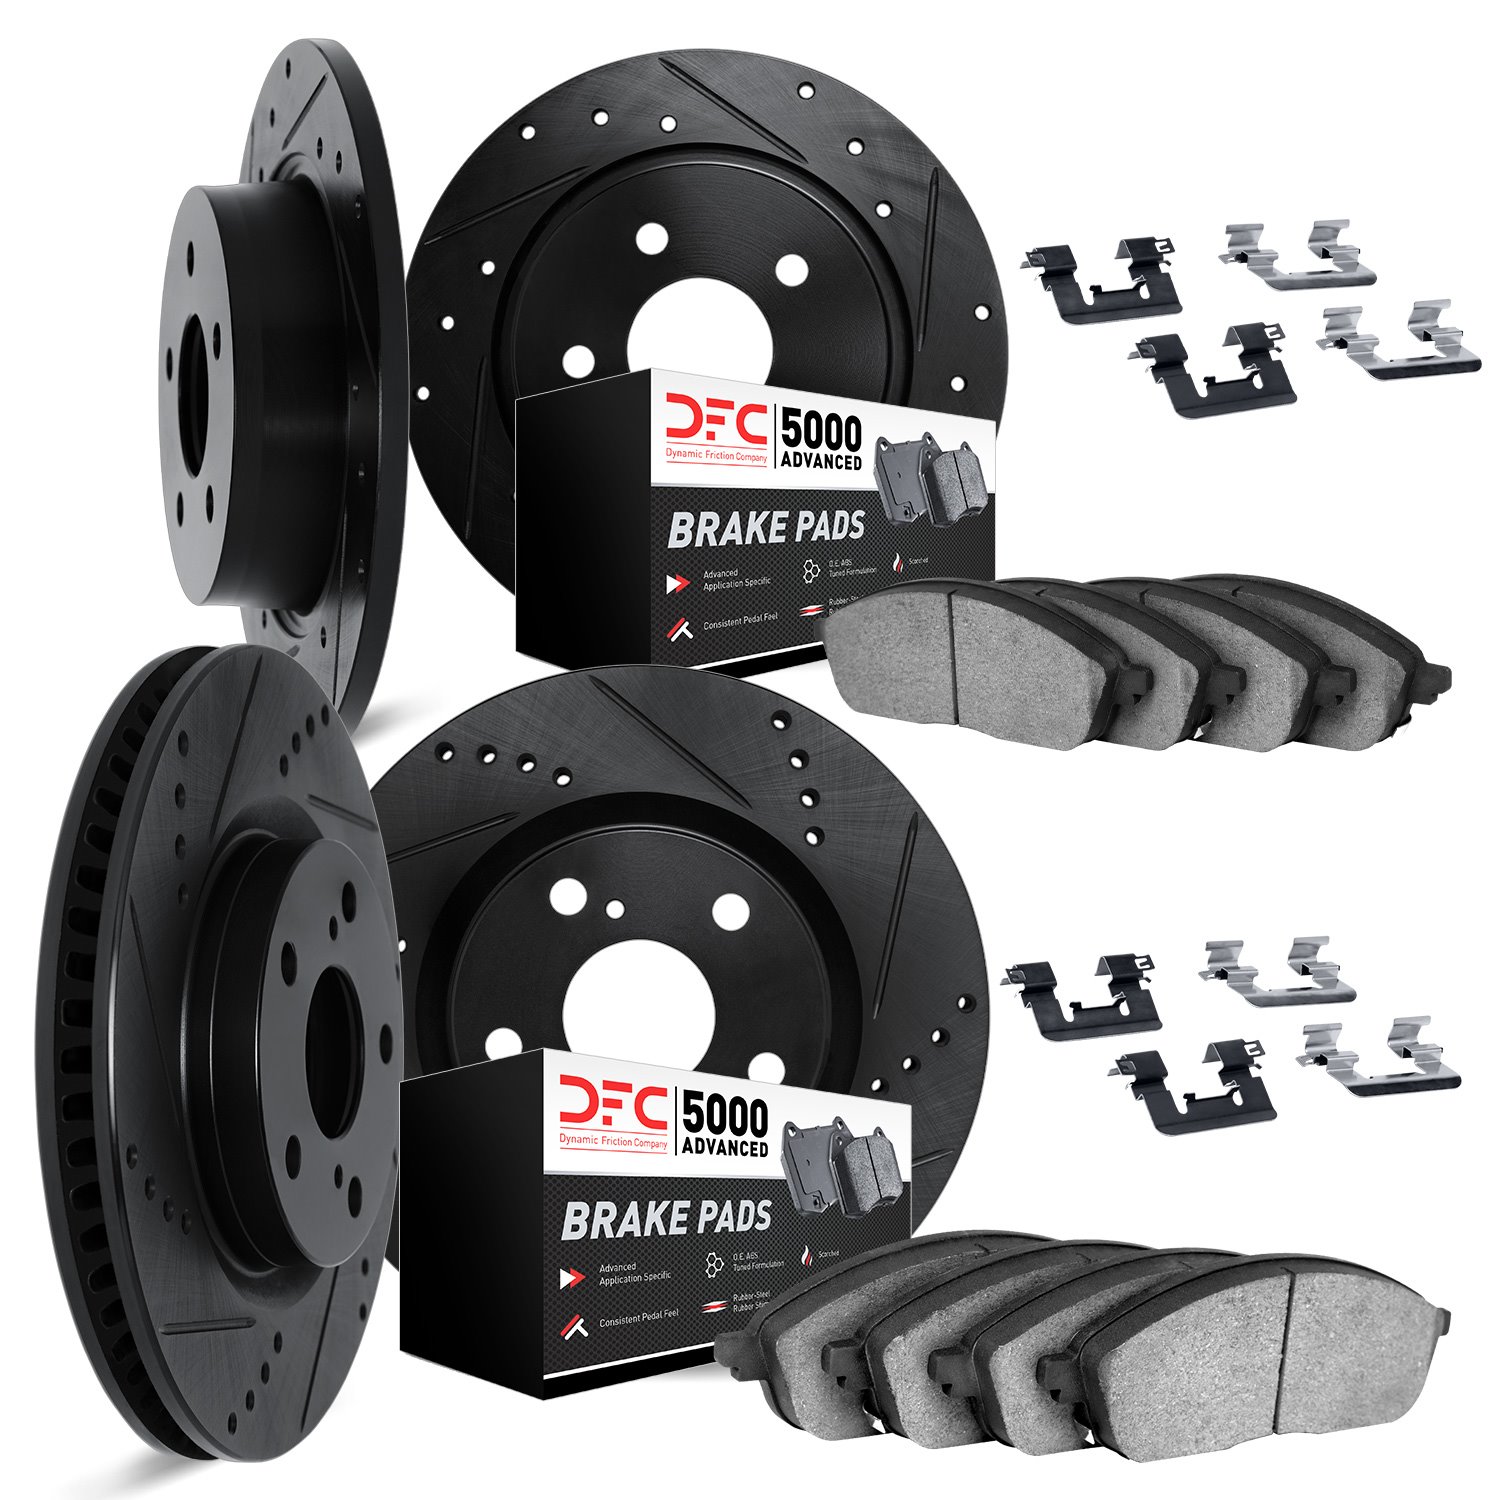 8514-67118 Drilled/Slotted Brake Rotors w/5000 Advanced Brake Pads Kit & Hardware [Black], Fits Select Infiniti/Nissan, Position